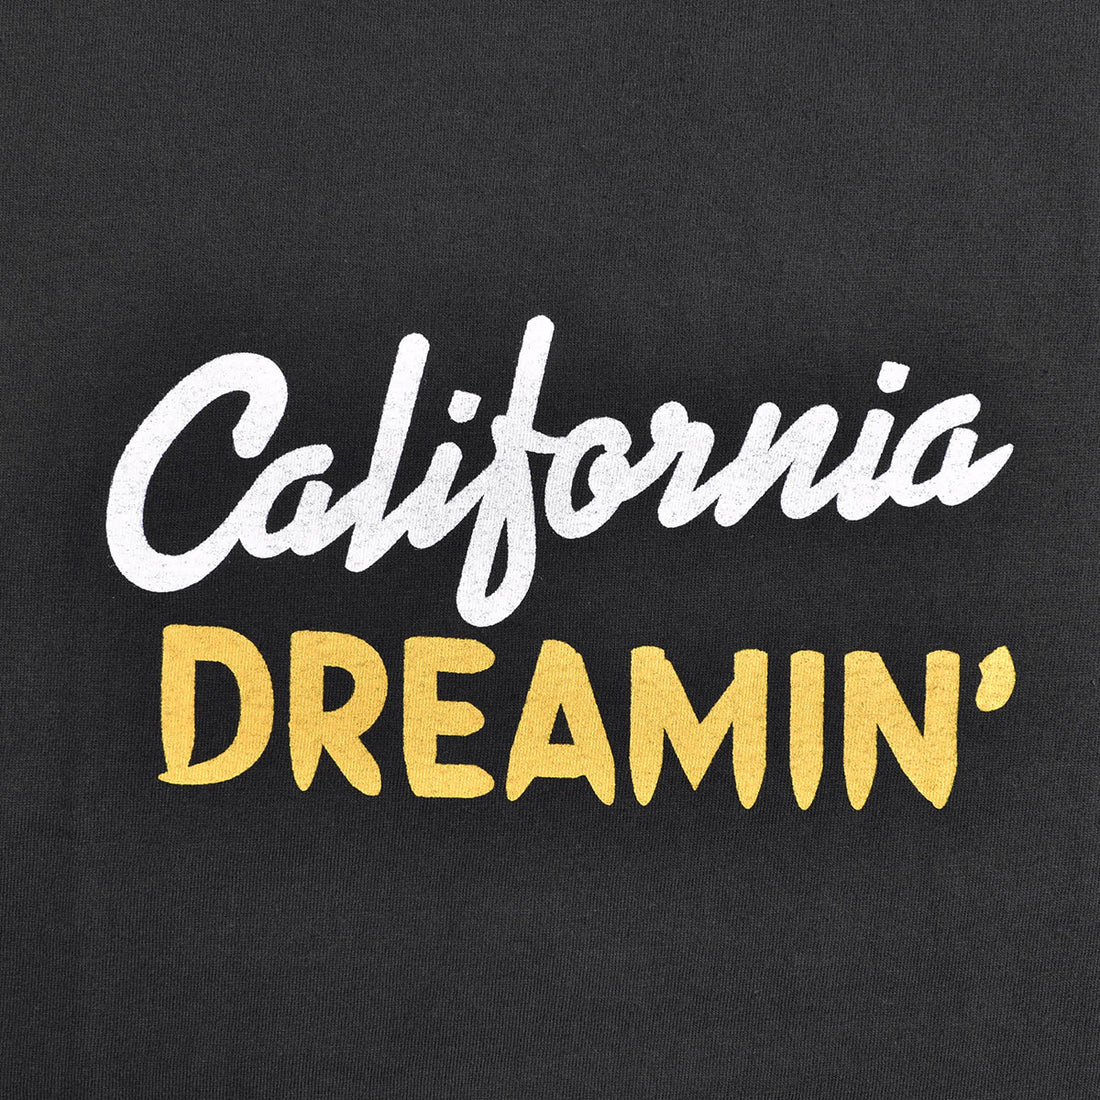 [STANDARD CALIFORNIA]SD California Dreamin’ T/BLACK(TSOSX090)